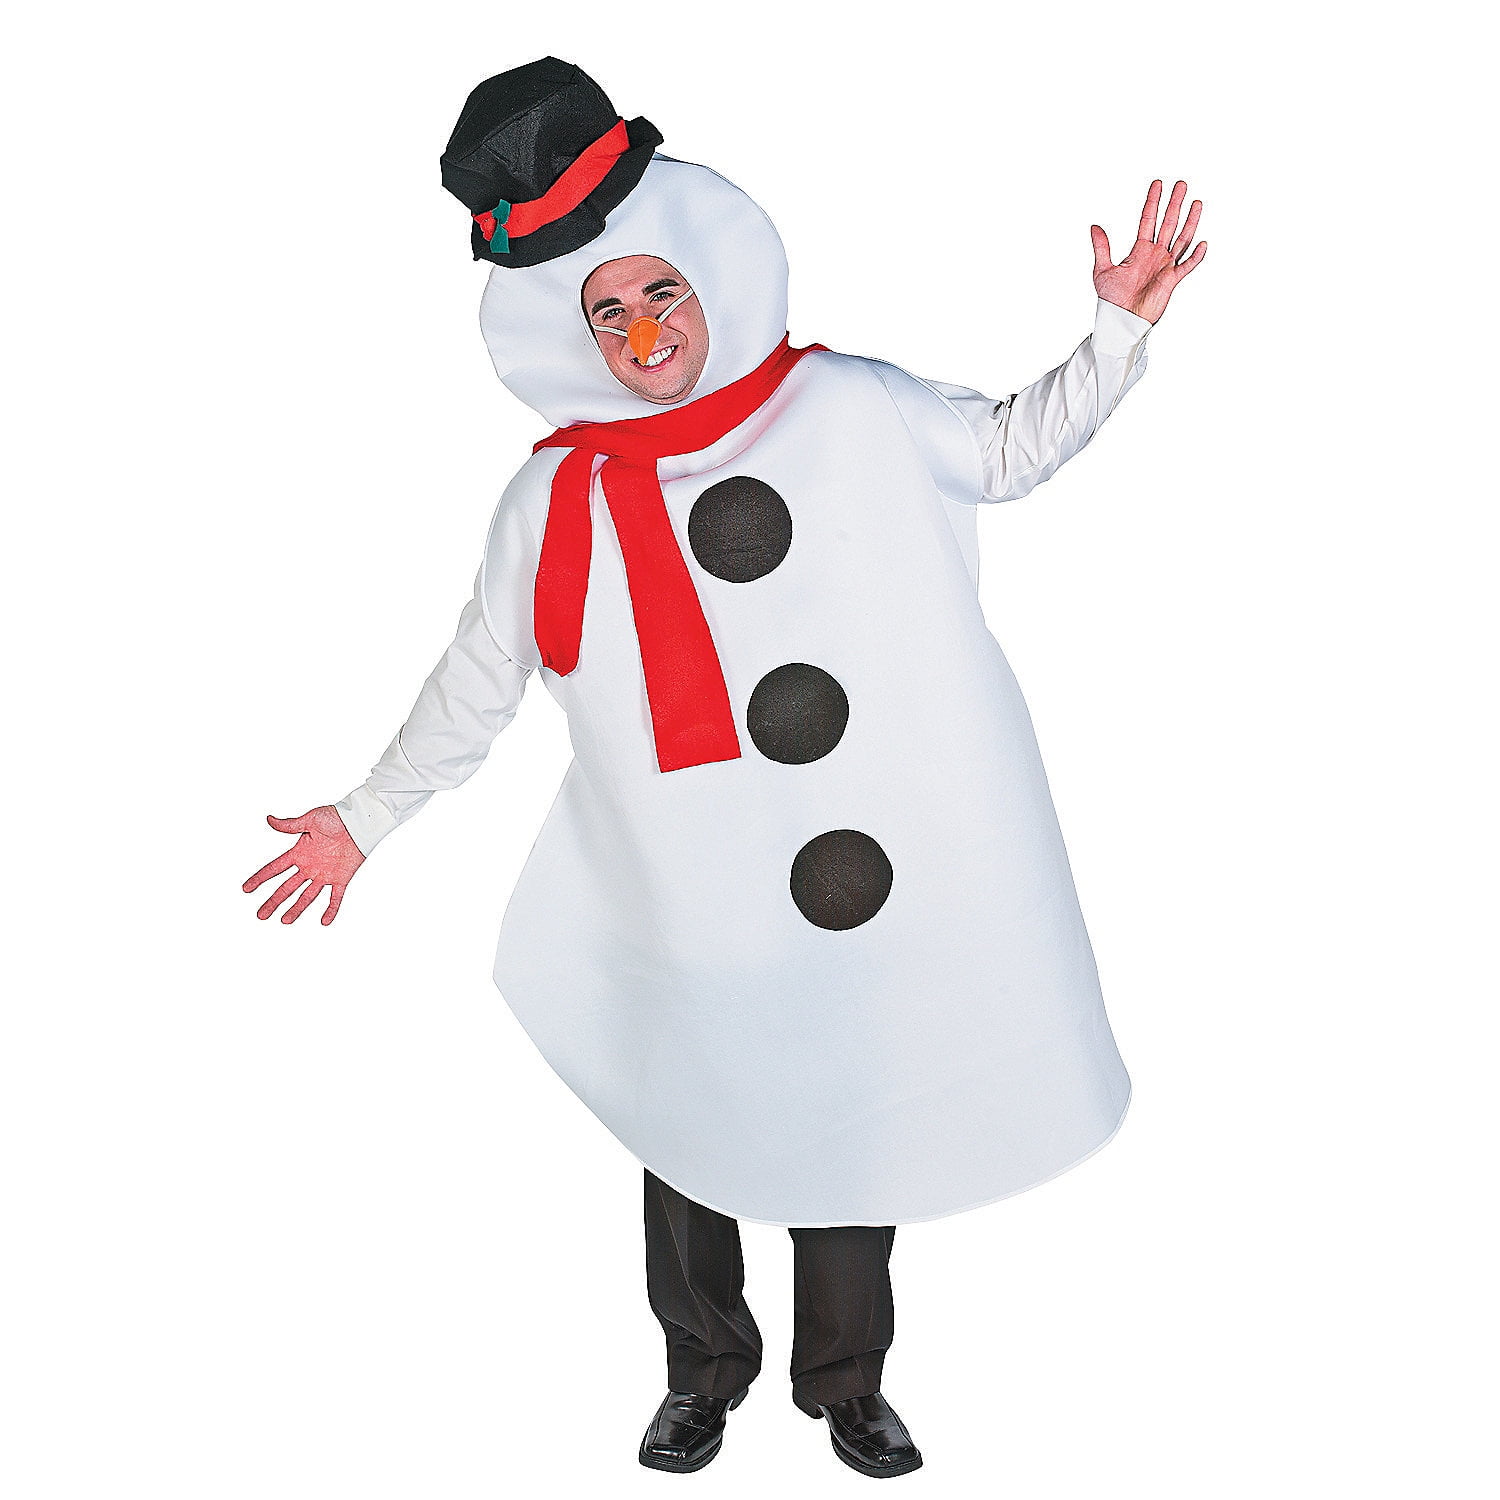 Headbands Pet accessories Adult Musical Headbands Costumes Frosty the Snowman 